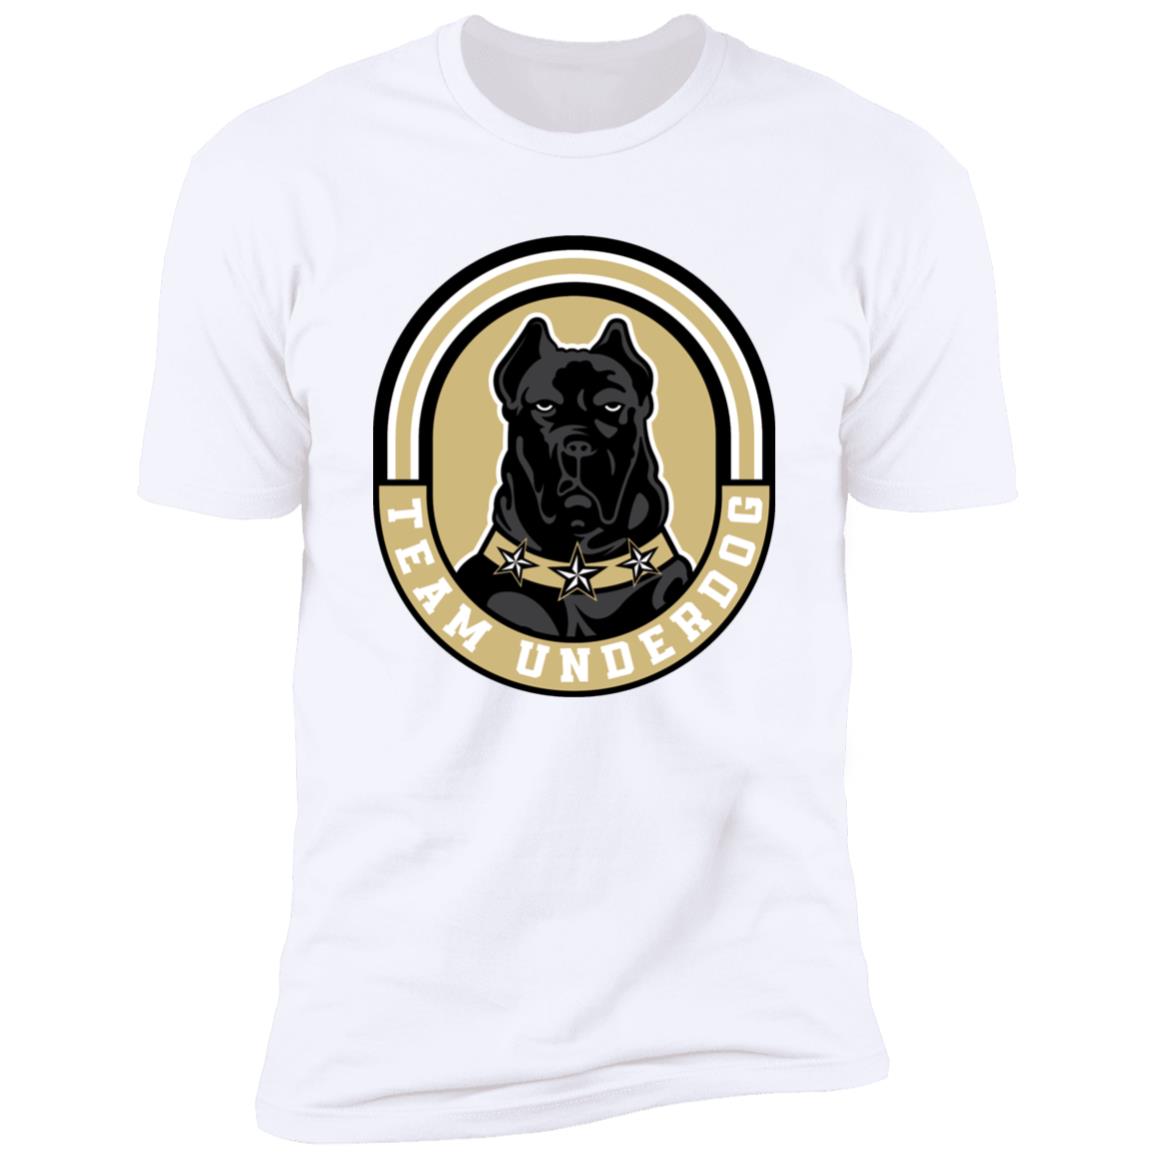 Team Underdog CU NL3600 Premium Short Sleeve T-Shirt